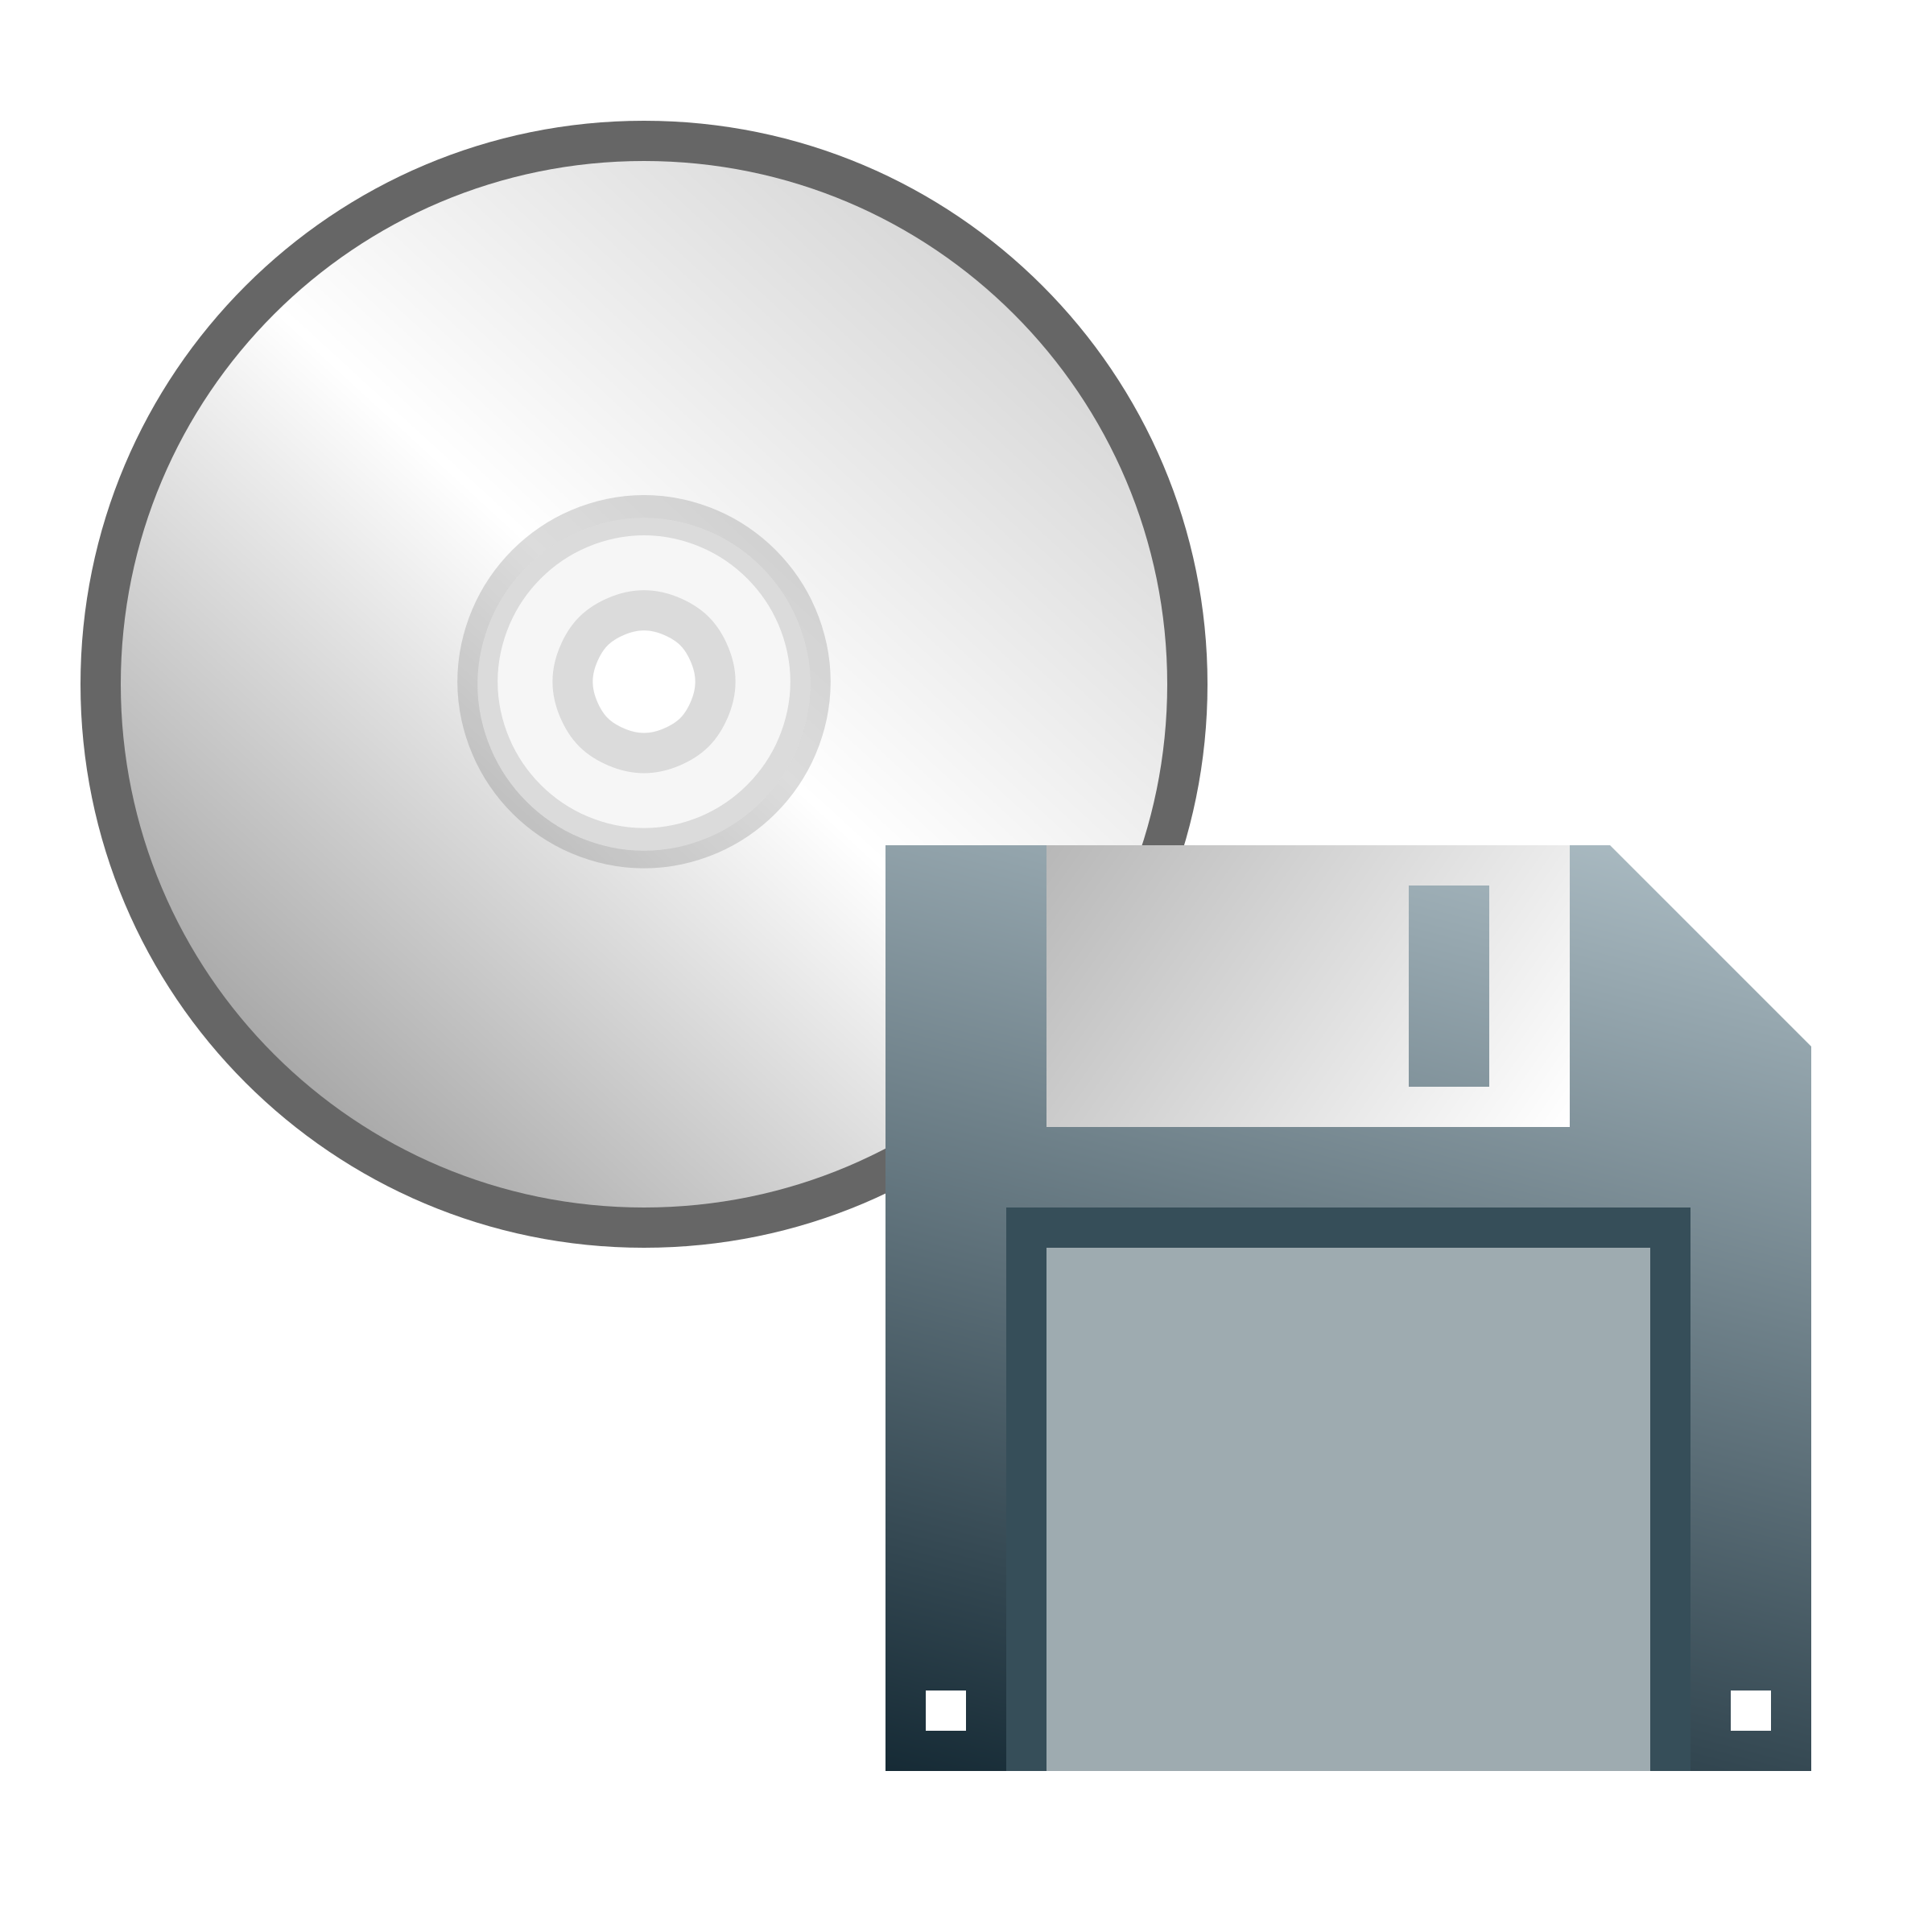 CD or floppy disk icon Clip arts